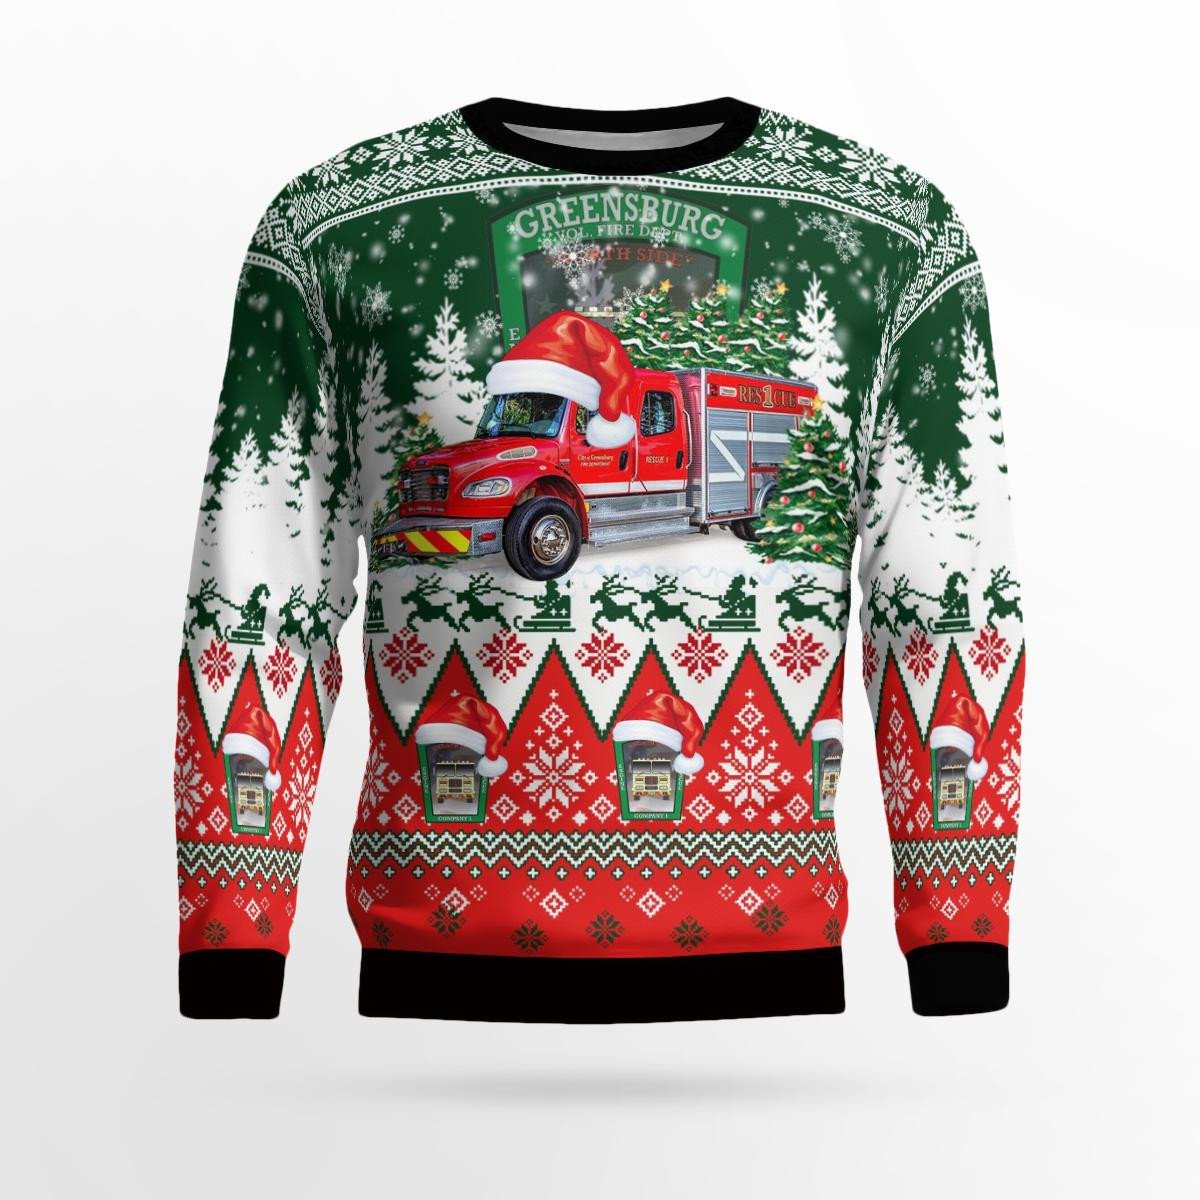 Greensburg Hose Co. 1 Christmas All Over Print Ugly Sweater/ Perfect Shirt for Christmas